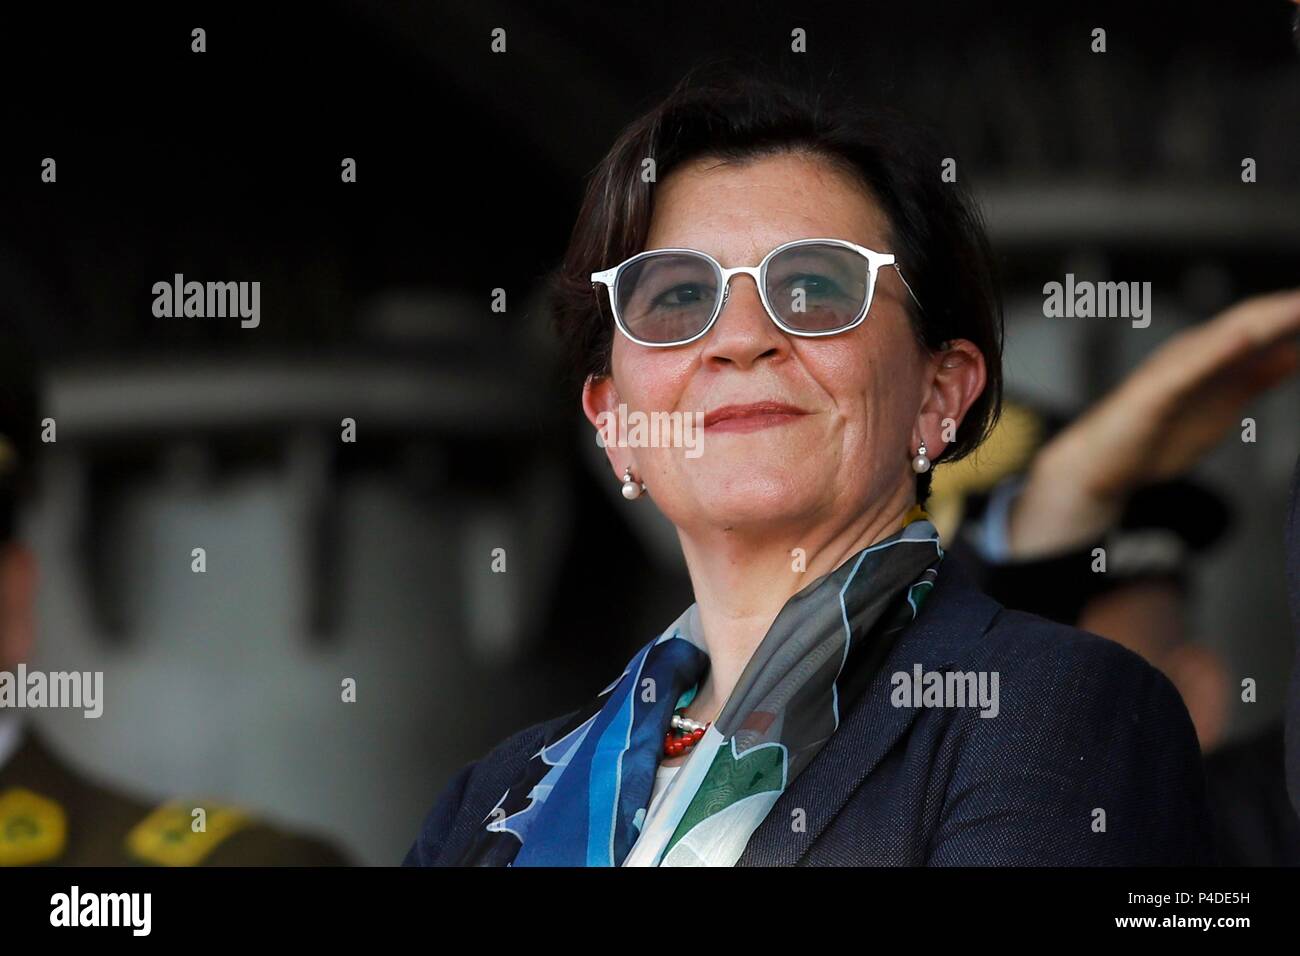 Italienische Verteidigungsminister Elisabetta Trenta während der Arma dei Carabinieri Partei in Rom, Italien, am Juni 05, 2018 Foto © Remo Casilli/Sintesi/Ala Stockfoto